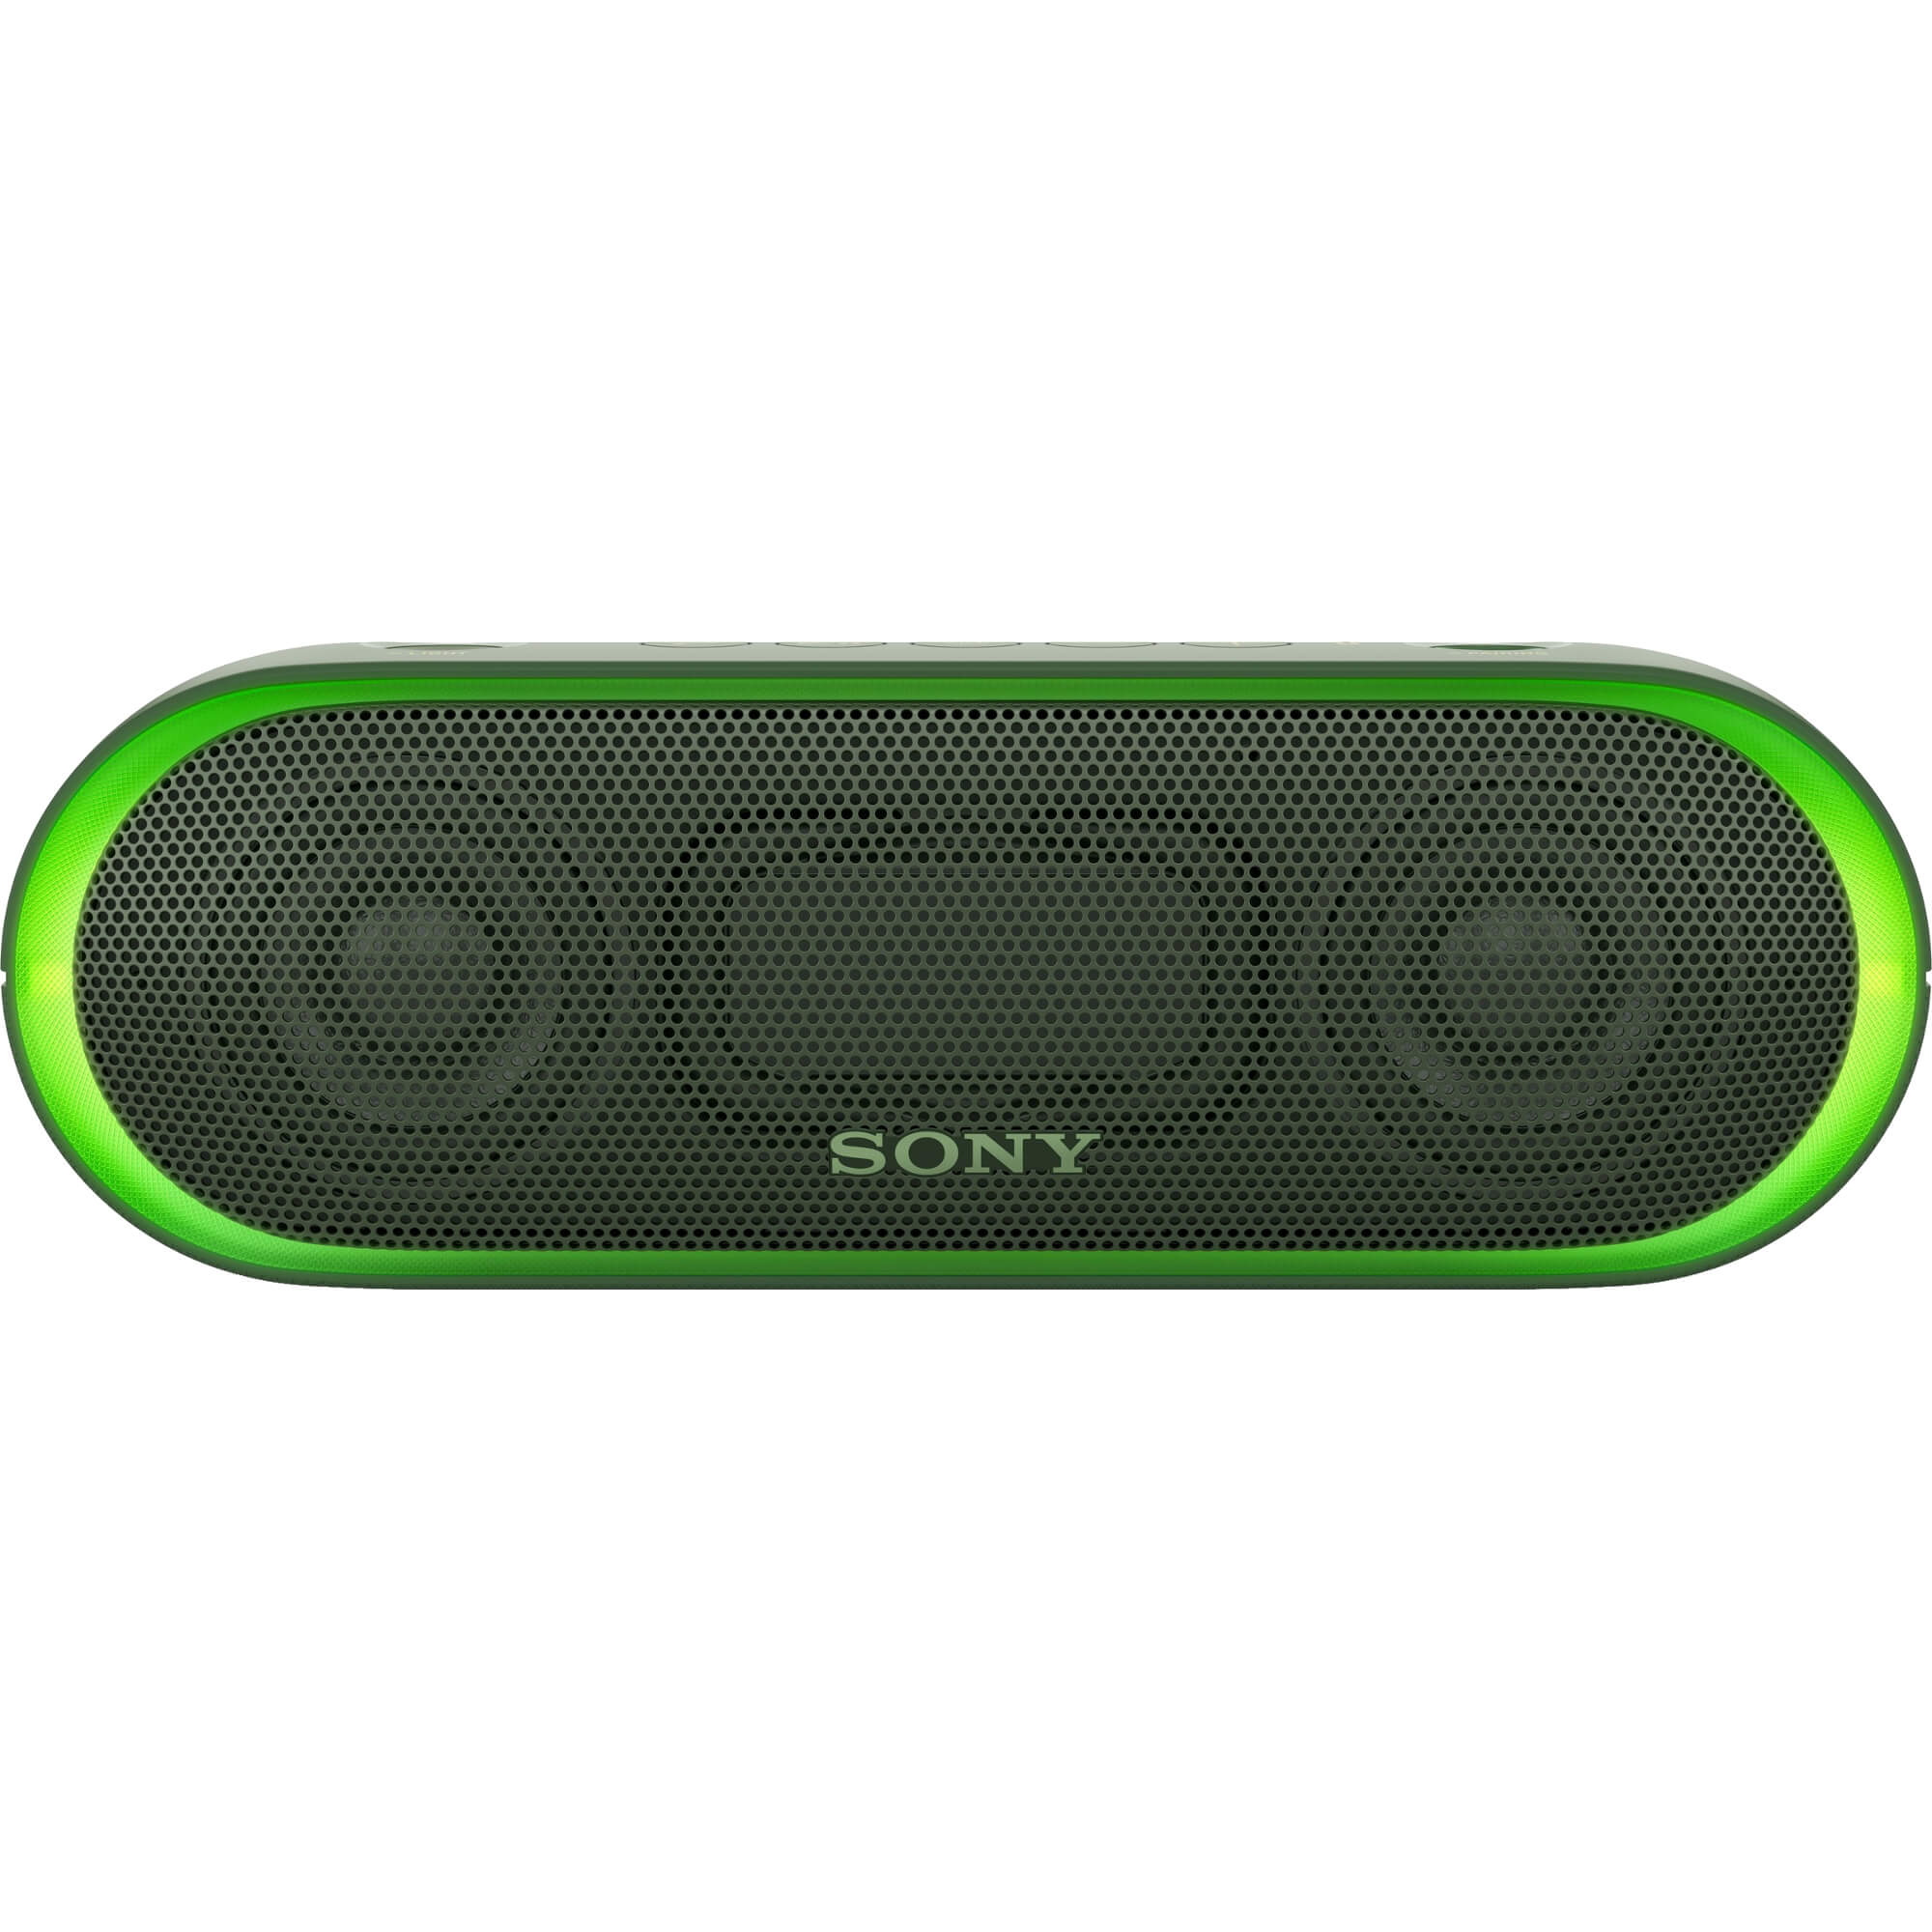  Boxa portabila Sony SRSXB20G.CE7, Bluetooth, Verde 